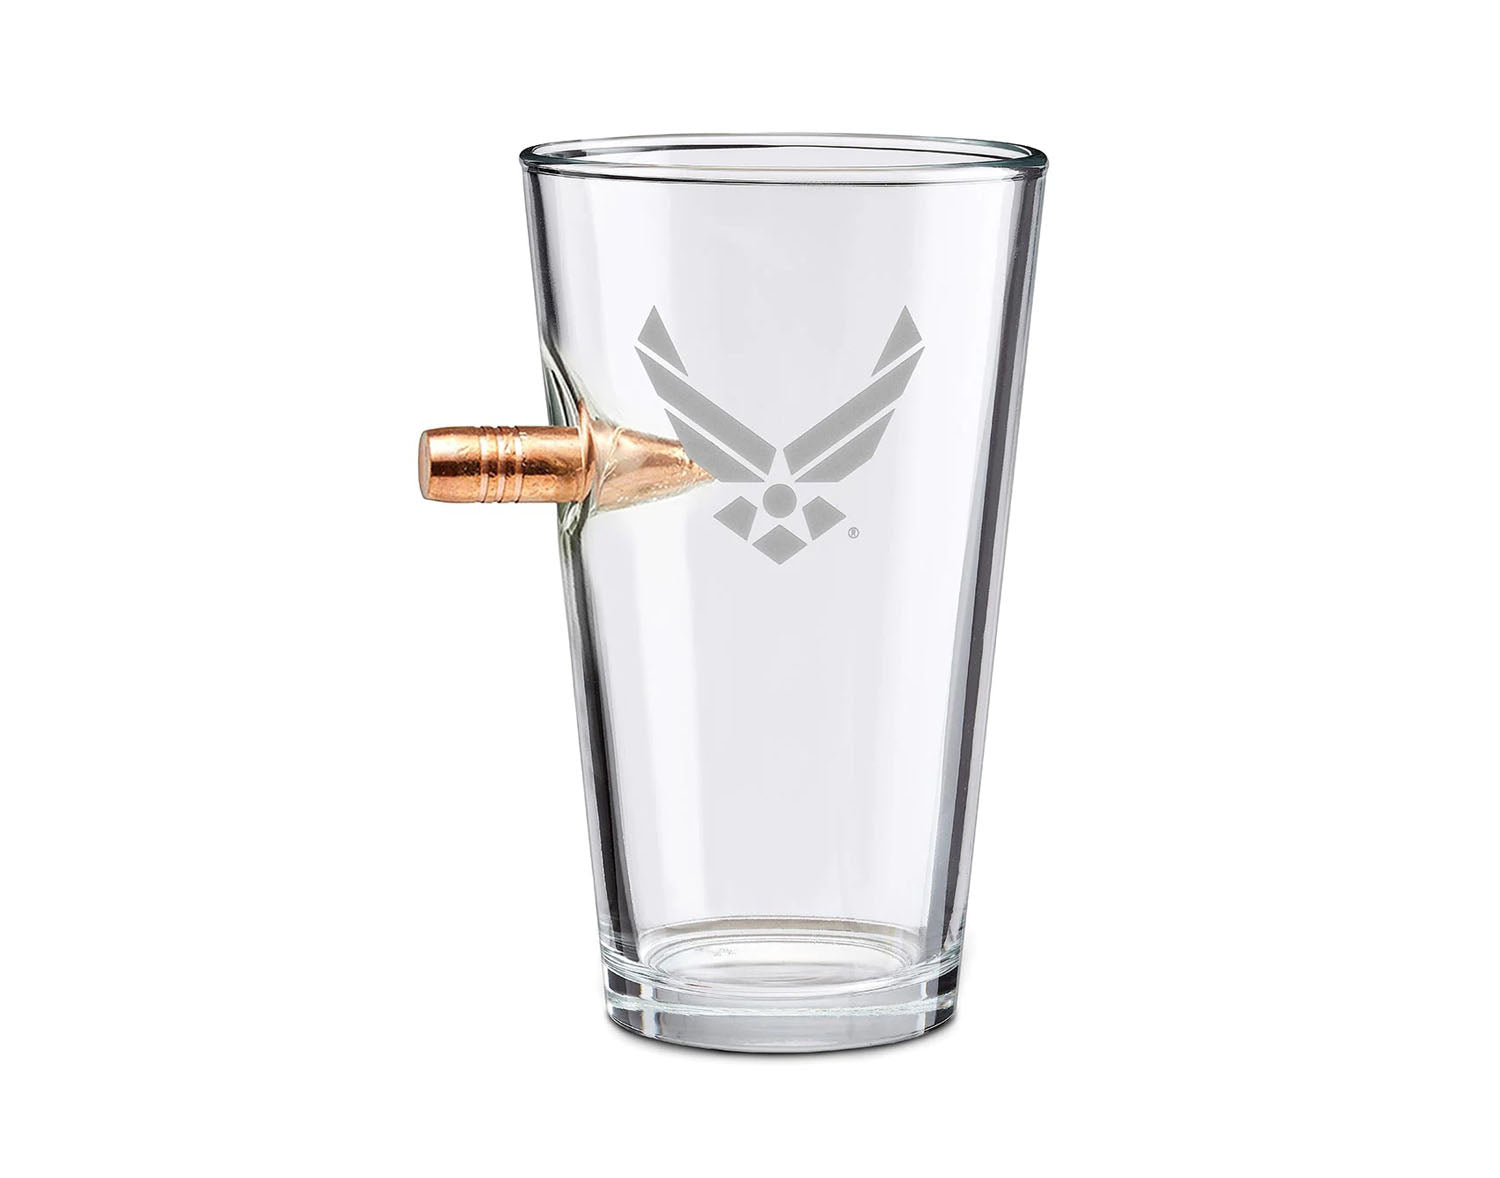 BenShot - "Bulletproof" U.S. Air Force Pint Glass - 16oz